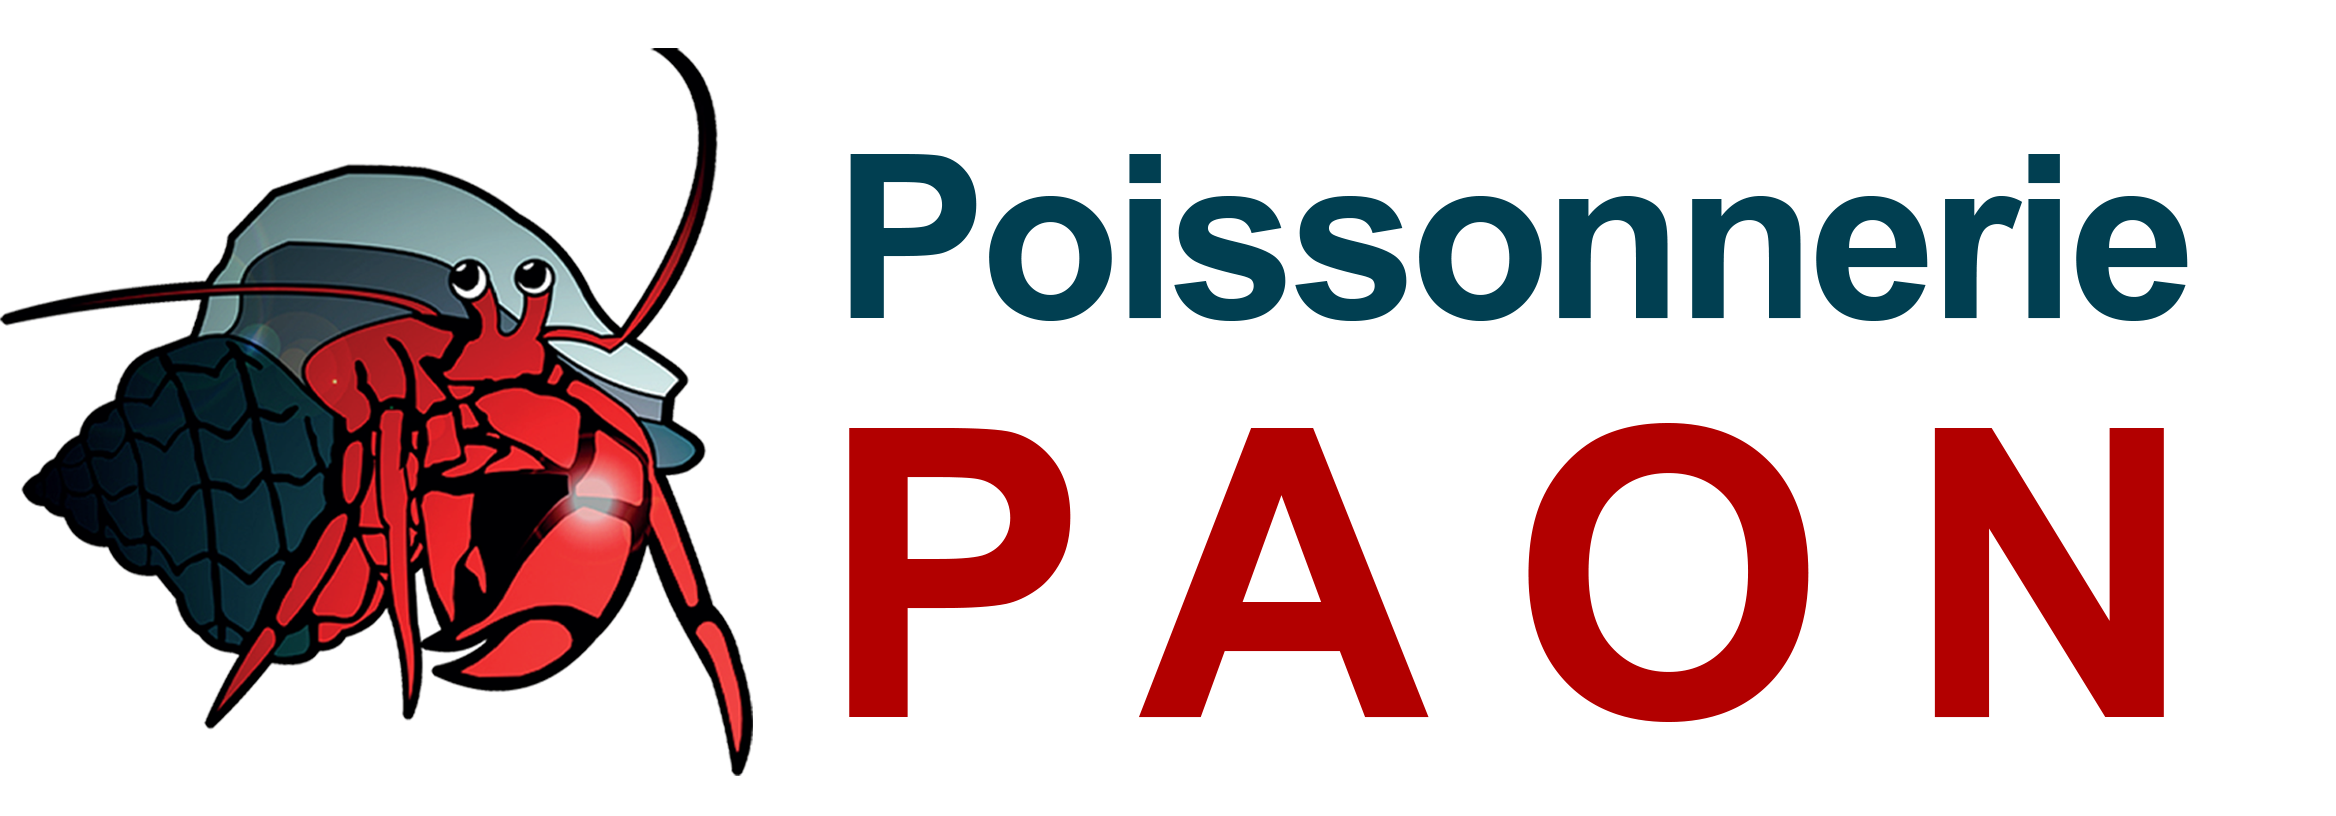 Poissonnerie Paon